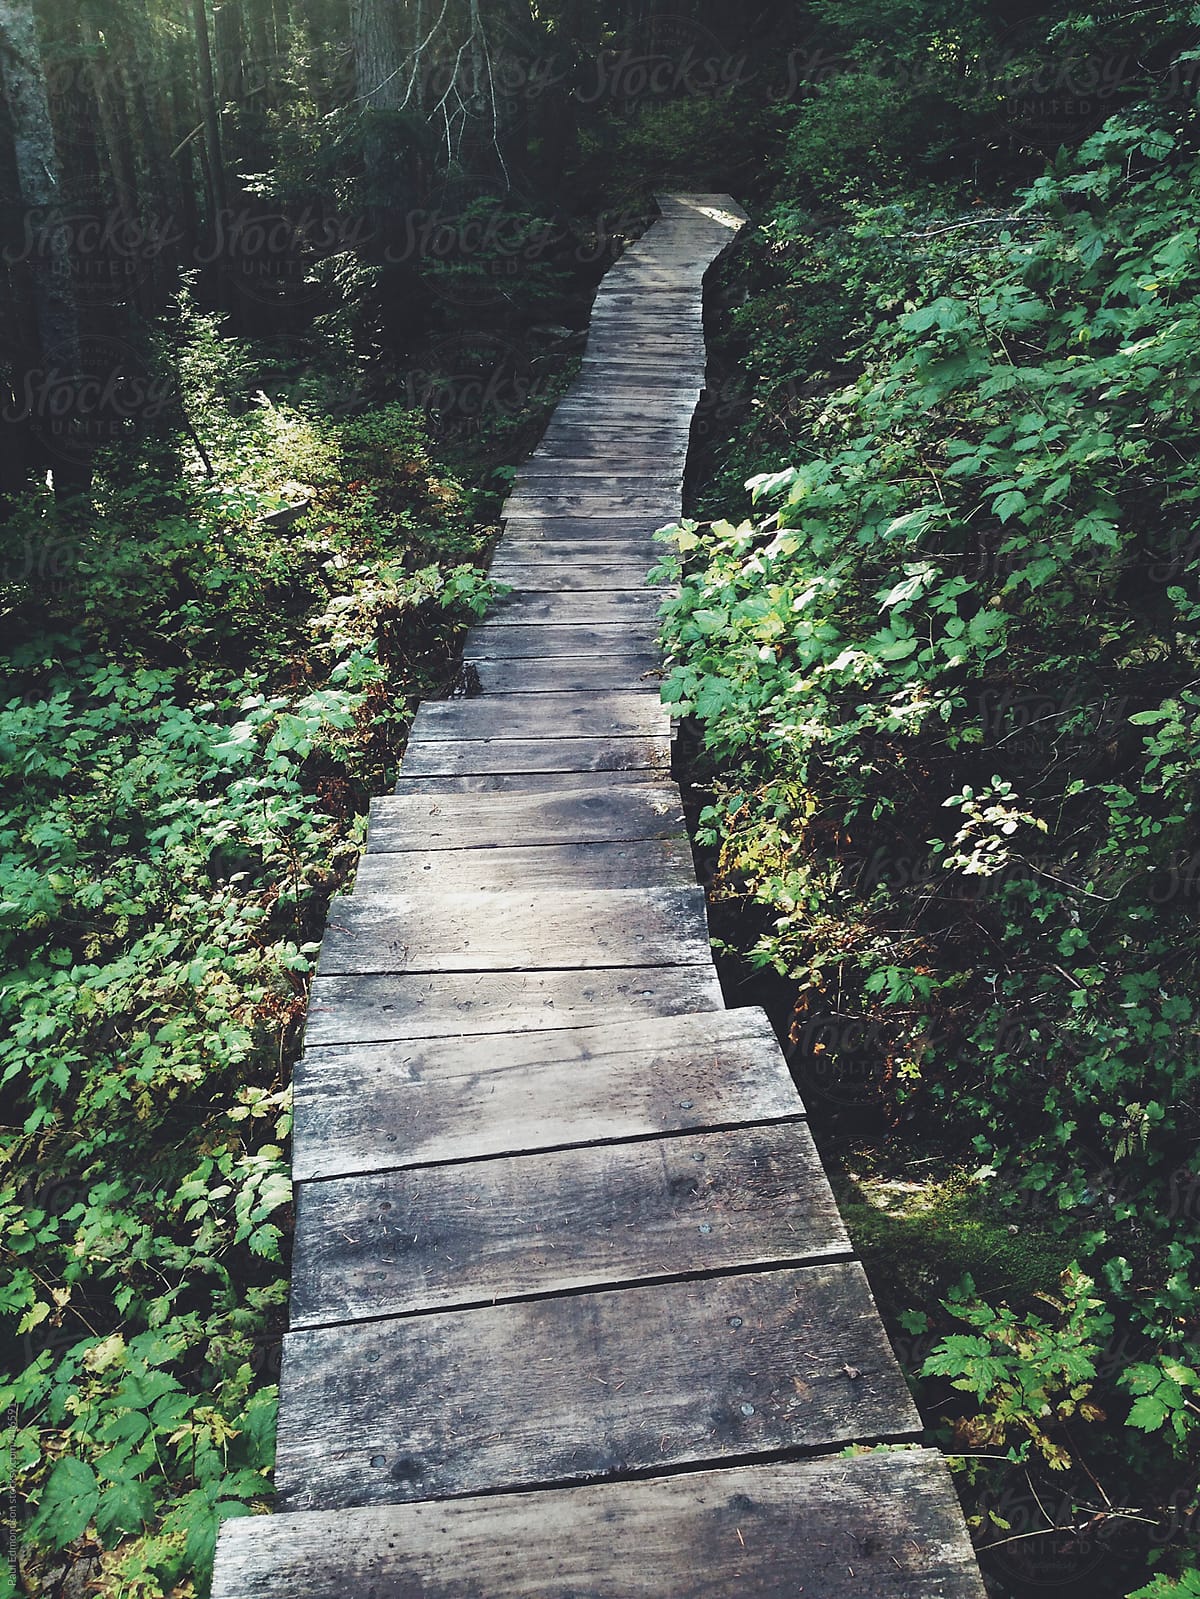 Boardwalk hiking trail through lush forest, North Cascades NP, WA, USA